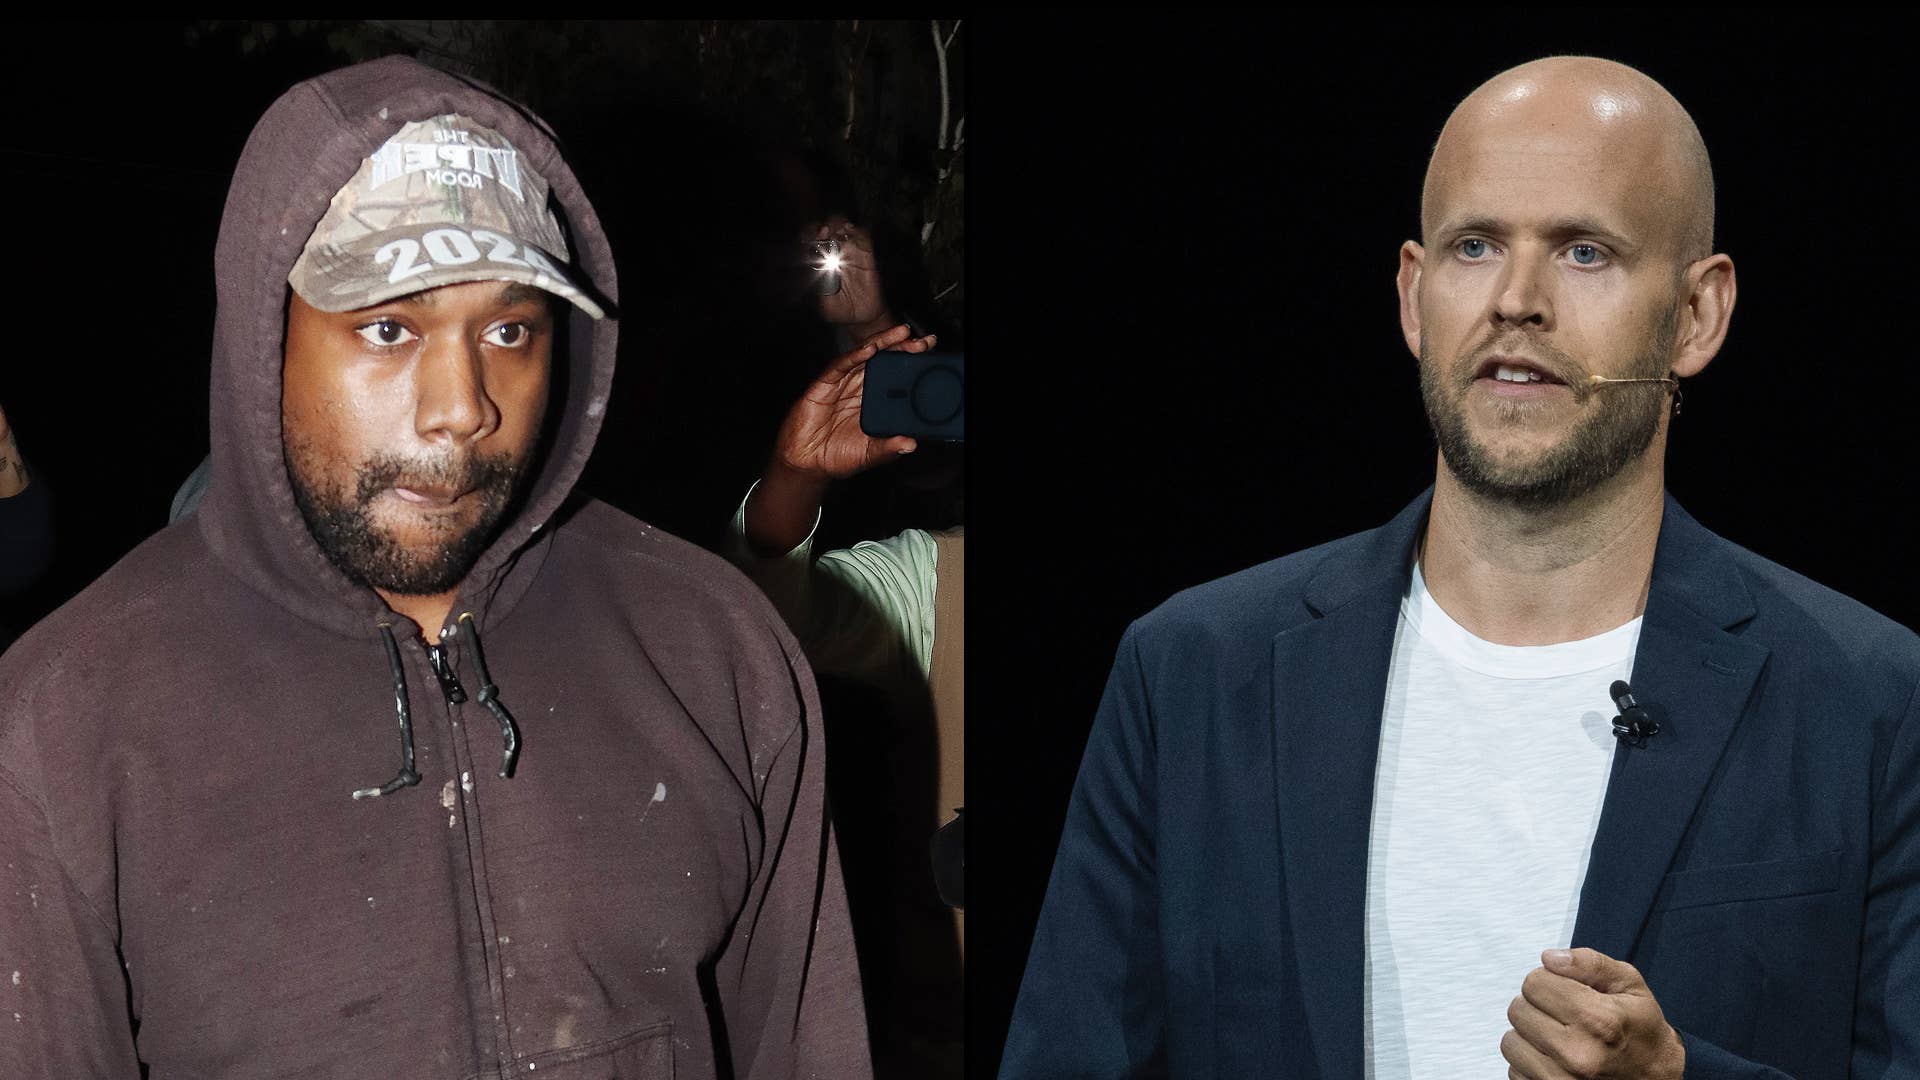 Spotify CEO Daniel Elk speaks on Kanye West controversy